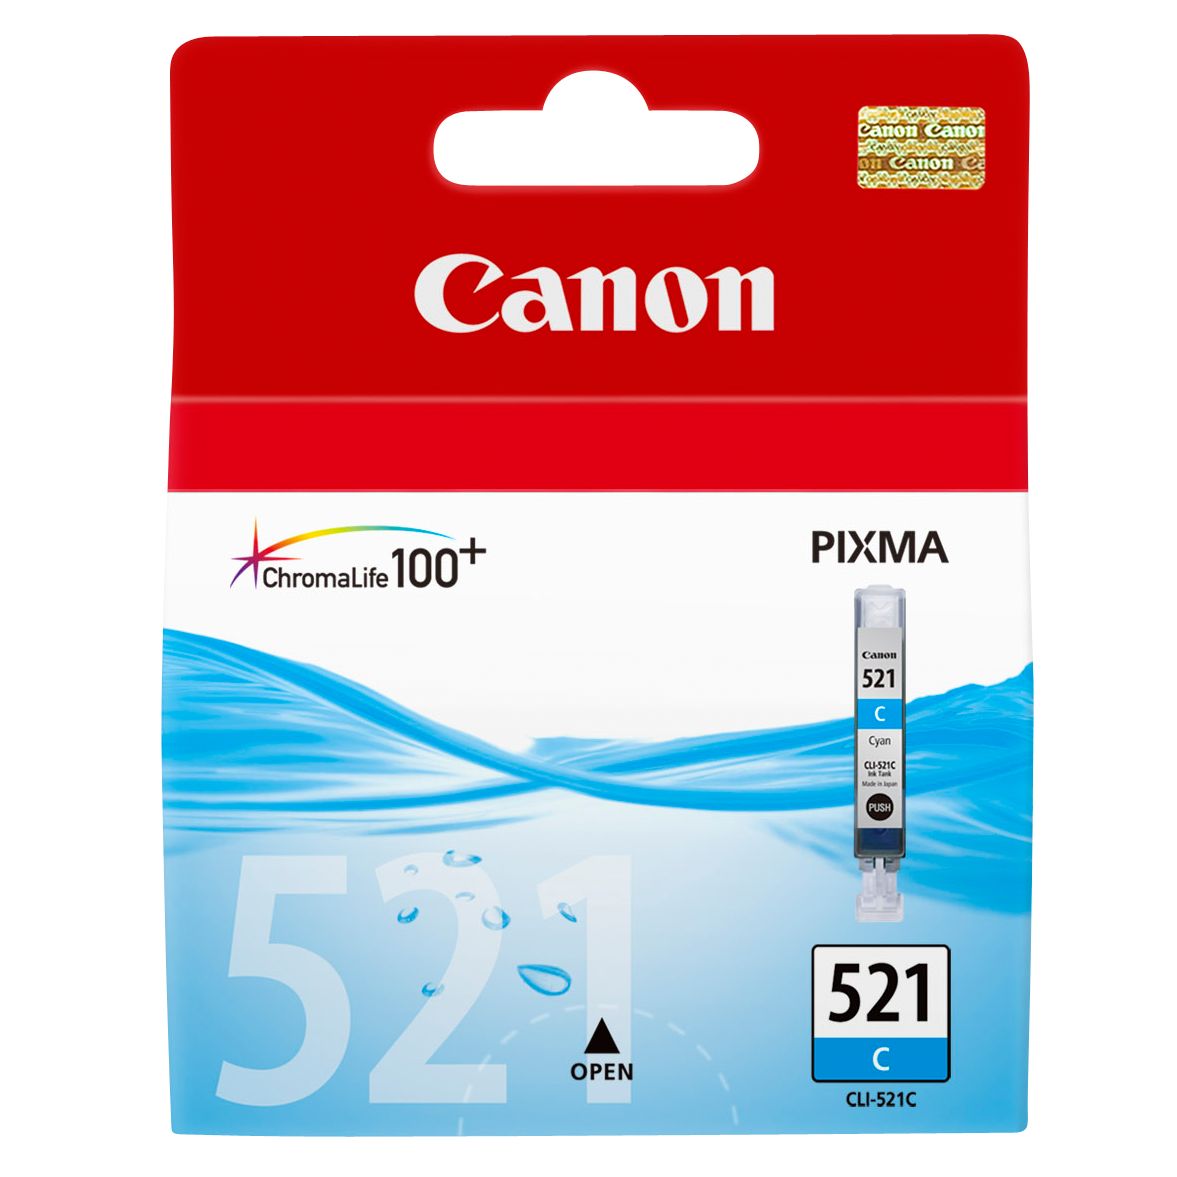 Pixma Inkjet Cartridge, Cyan, CLI-521